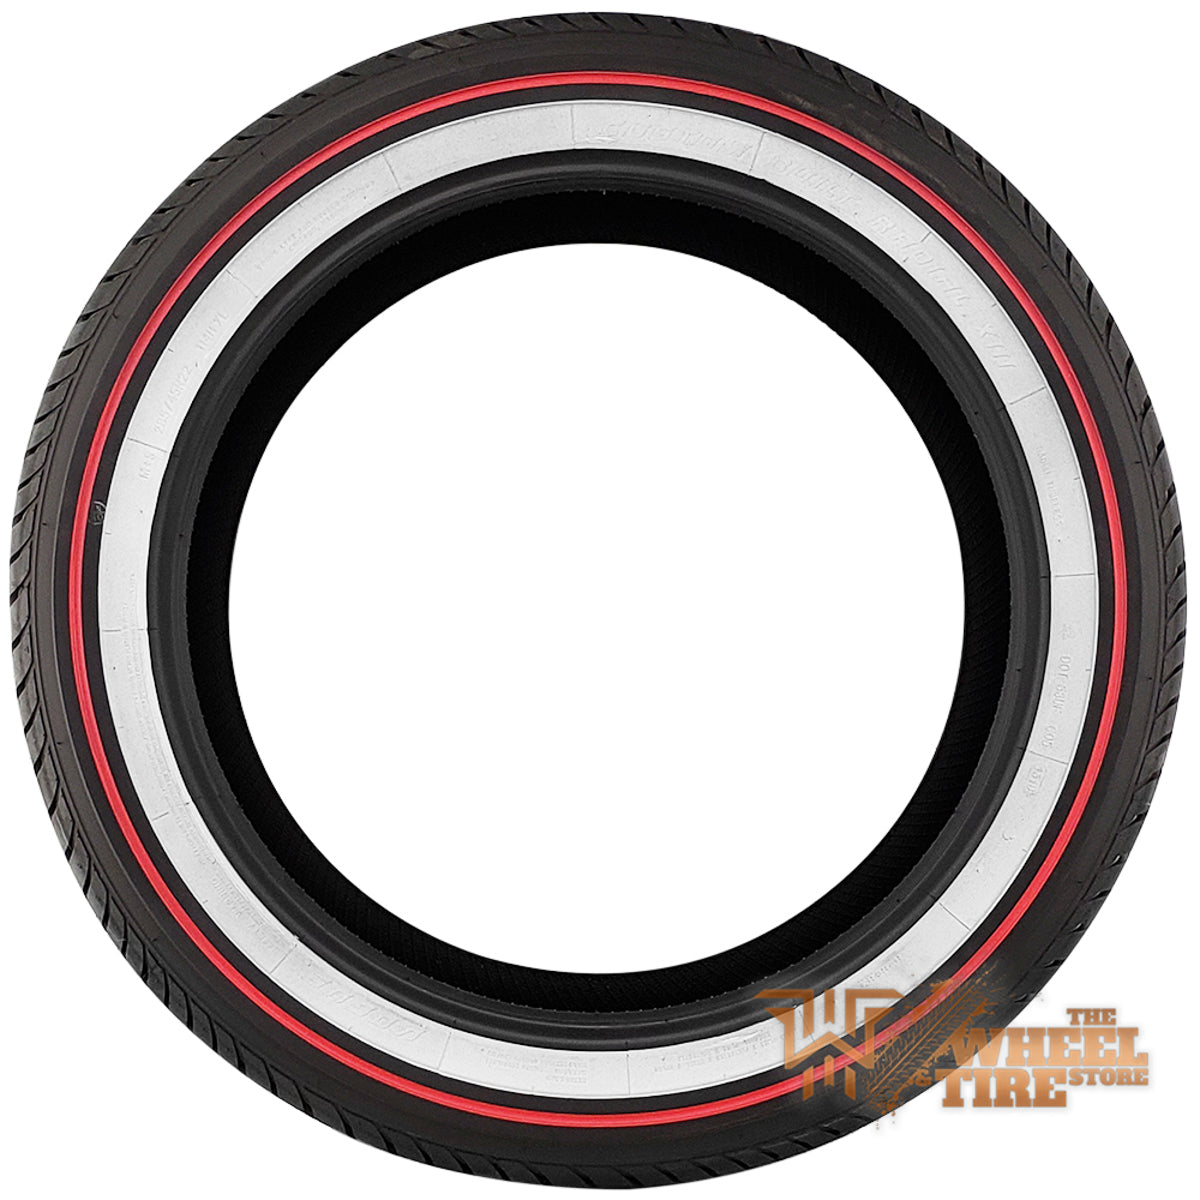 VOGUE Tyre Custom Built Radial VIII All-Season RED Stripe White Wall Tire Set of 4 FREE SHIPPING!